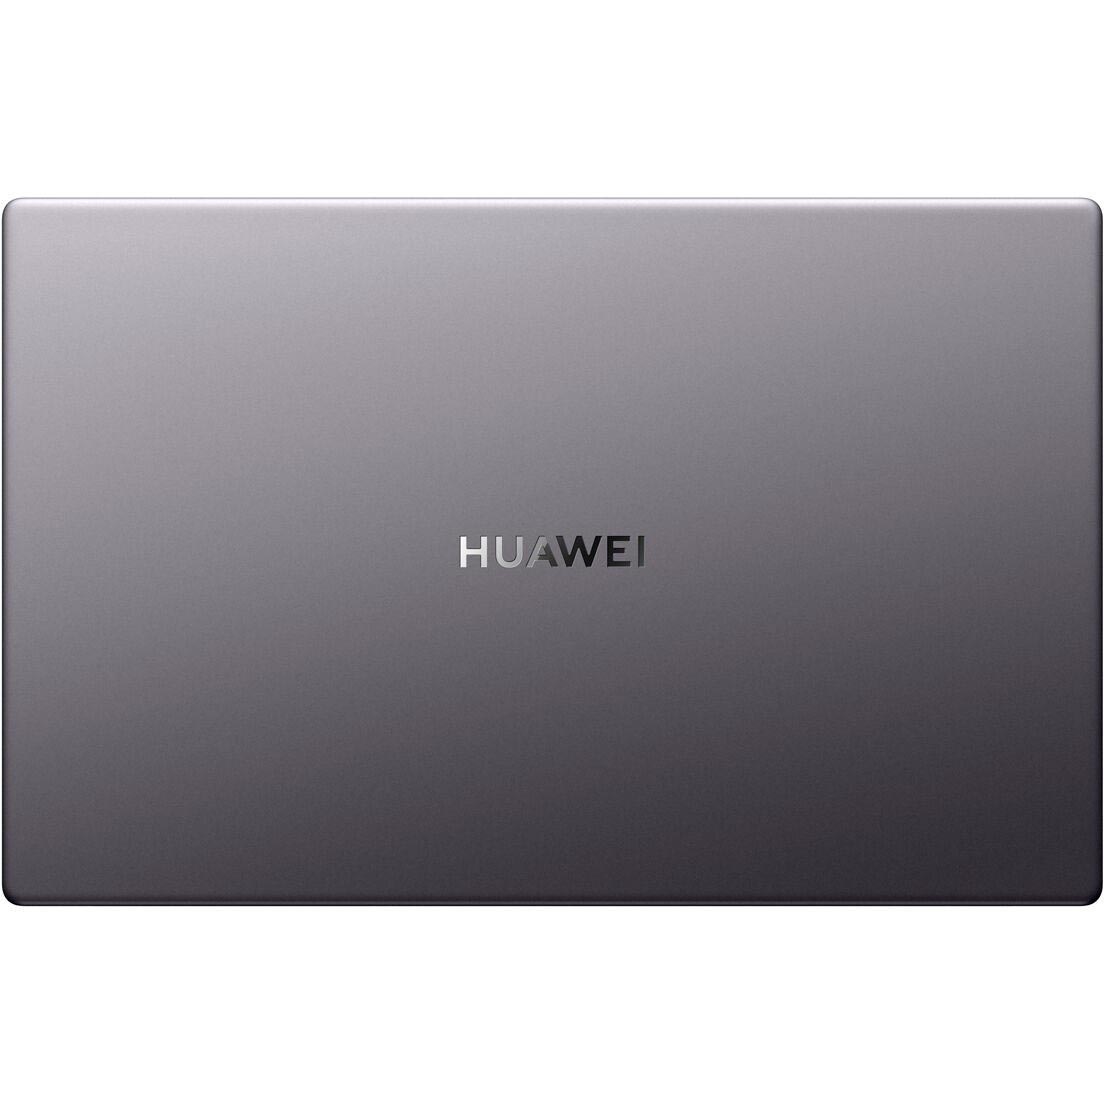 Ноутбук Huawei MATEBOOK d15 bod wdi9. Ноутбук ASUS x540ma-gq035. Ноутбук Huawei MATEBOOK D 14 NBM-wdq9 8+512gb Space Grey. Ультрабук Huawei MATEBOOK D 14. Ноутбук huawei matebook d15 gray